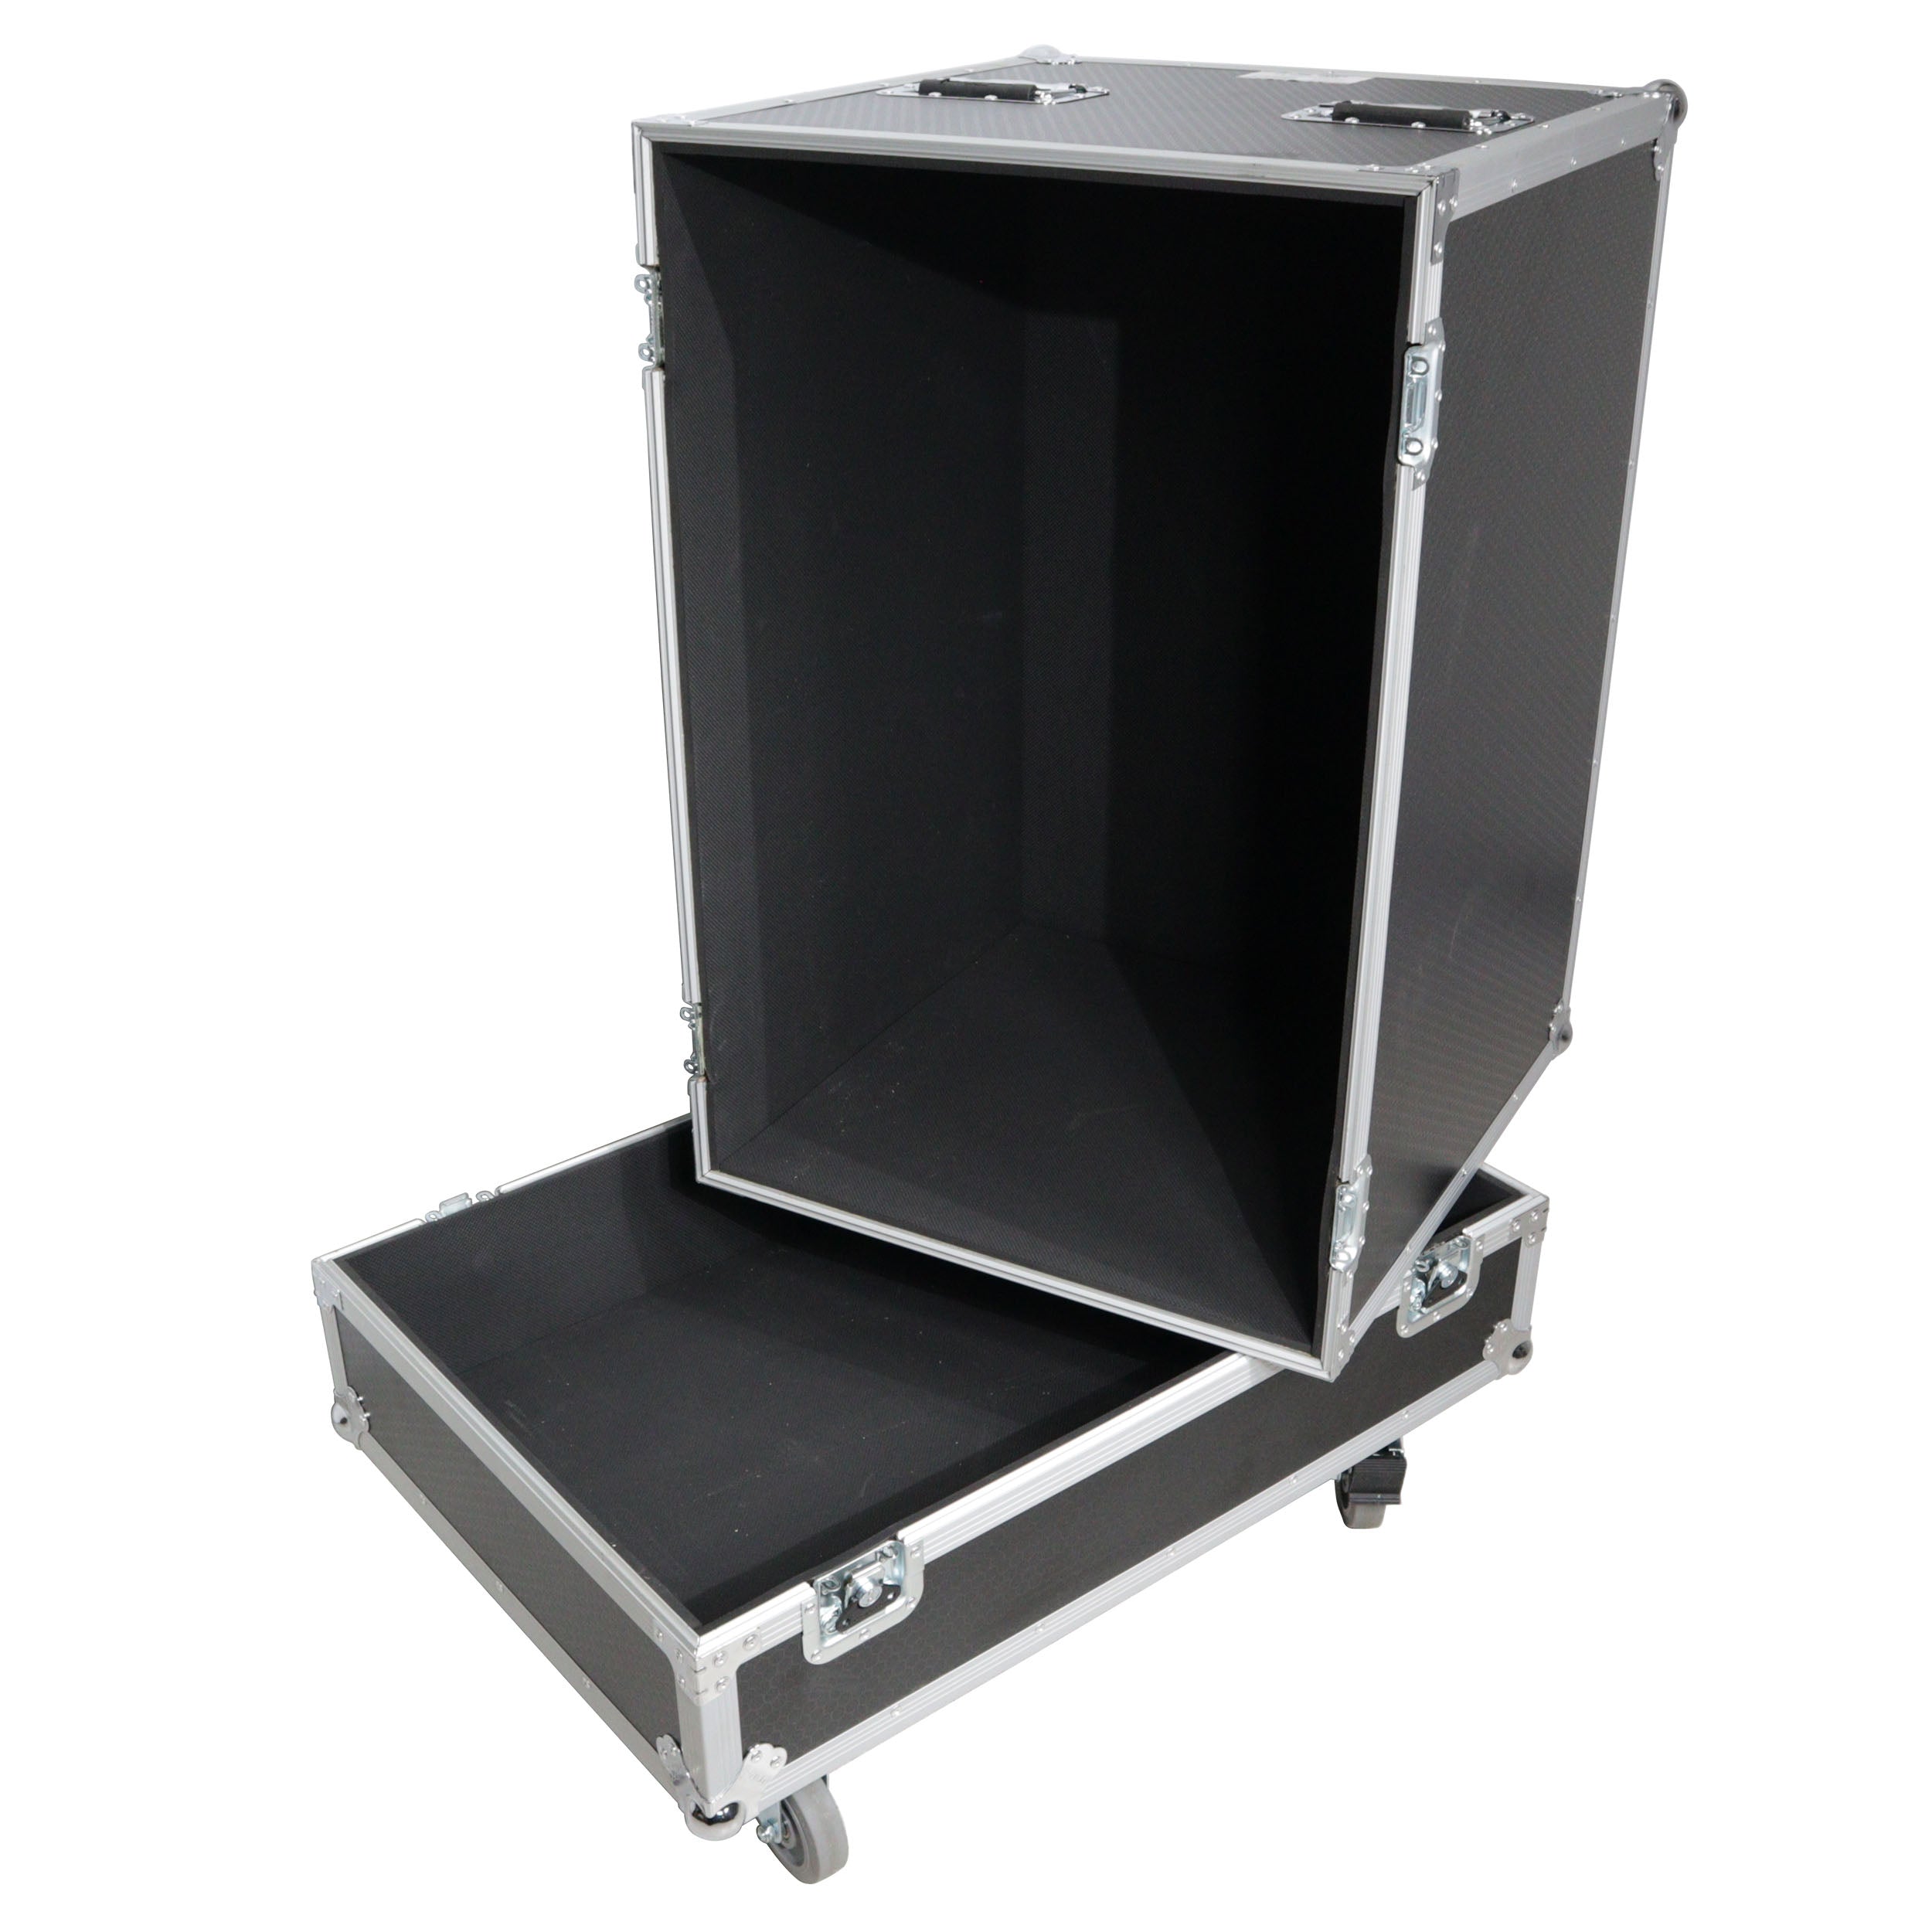 Pro X Universal ATA Single Speaker Flight Case fits most sized speakers 27x30x18 in. XS-SP273018W